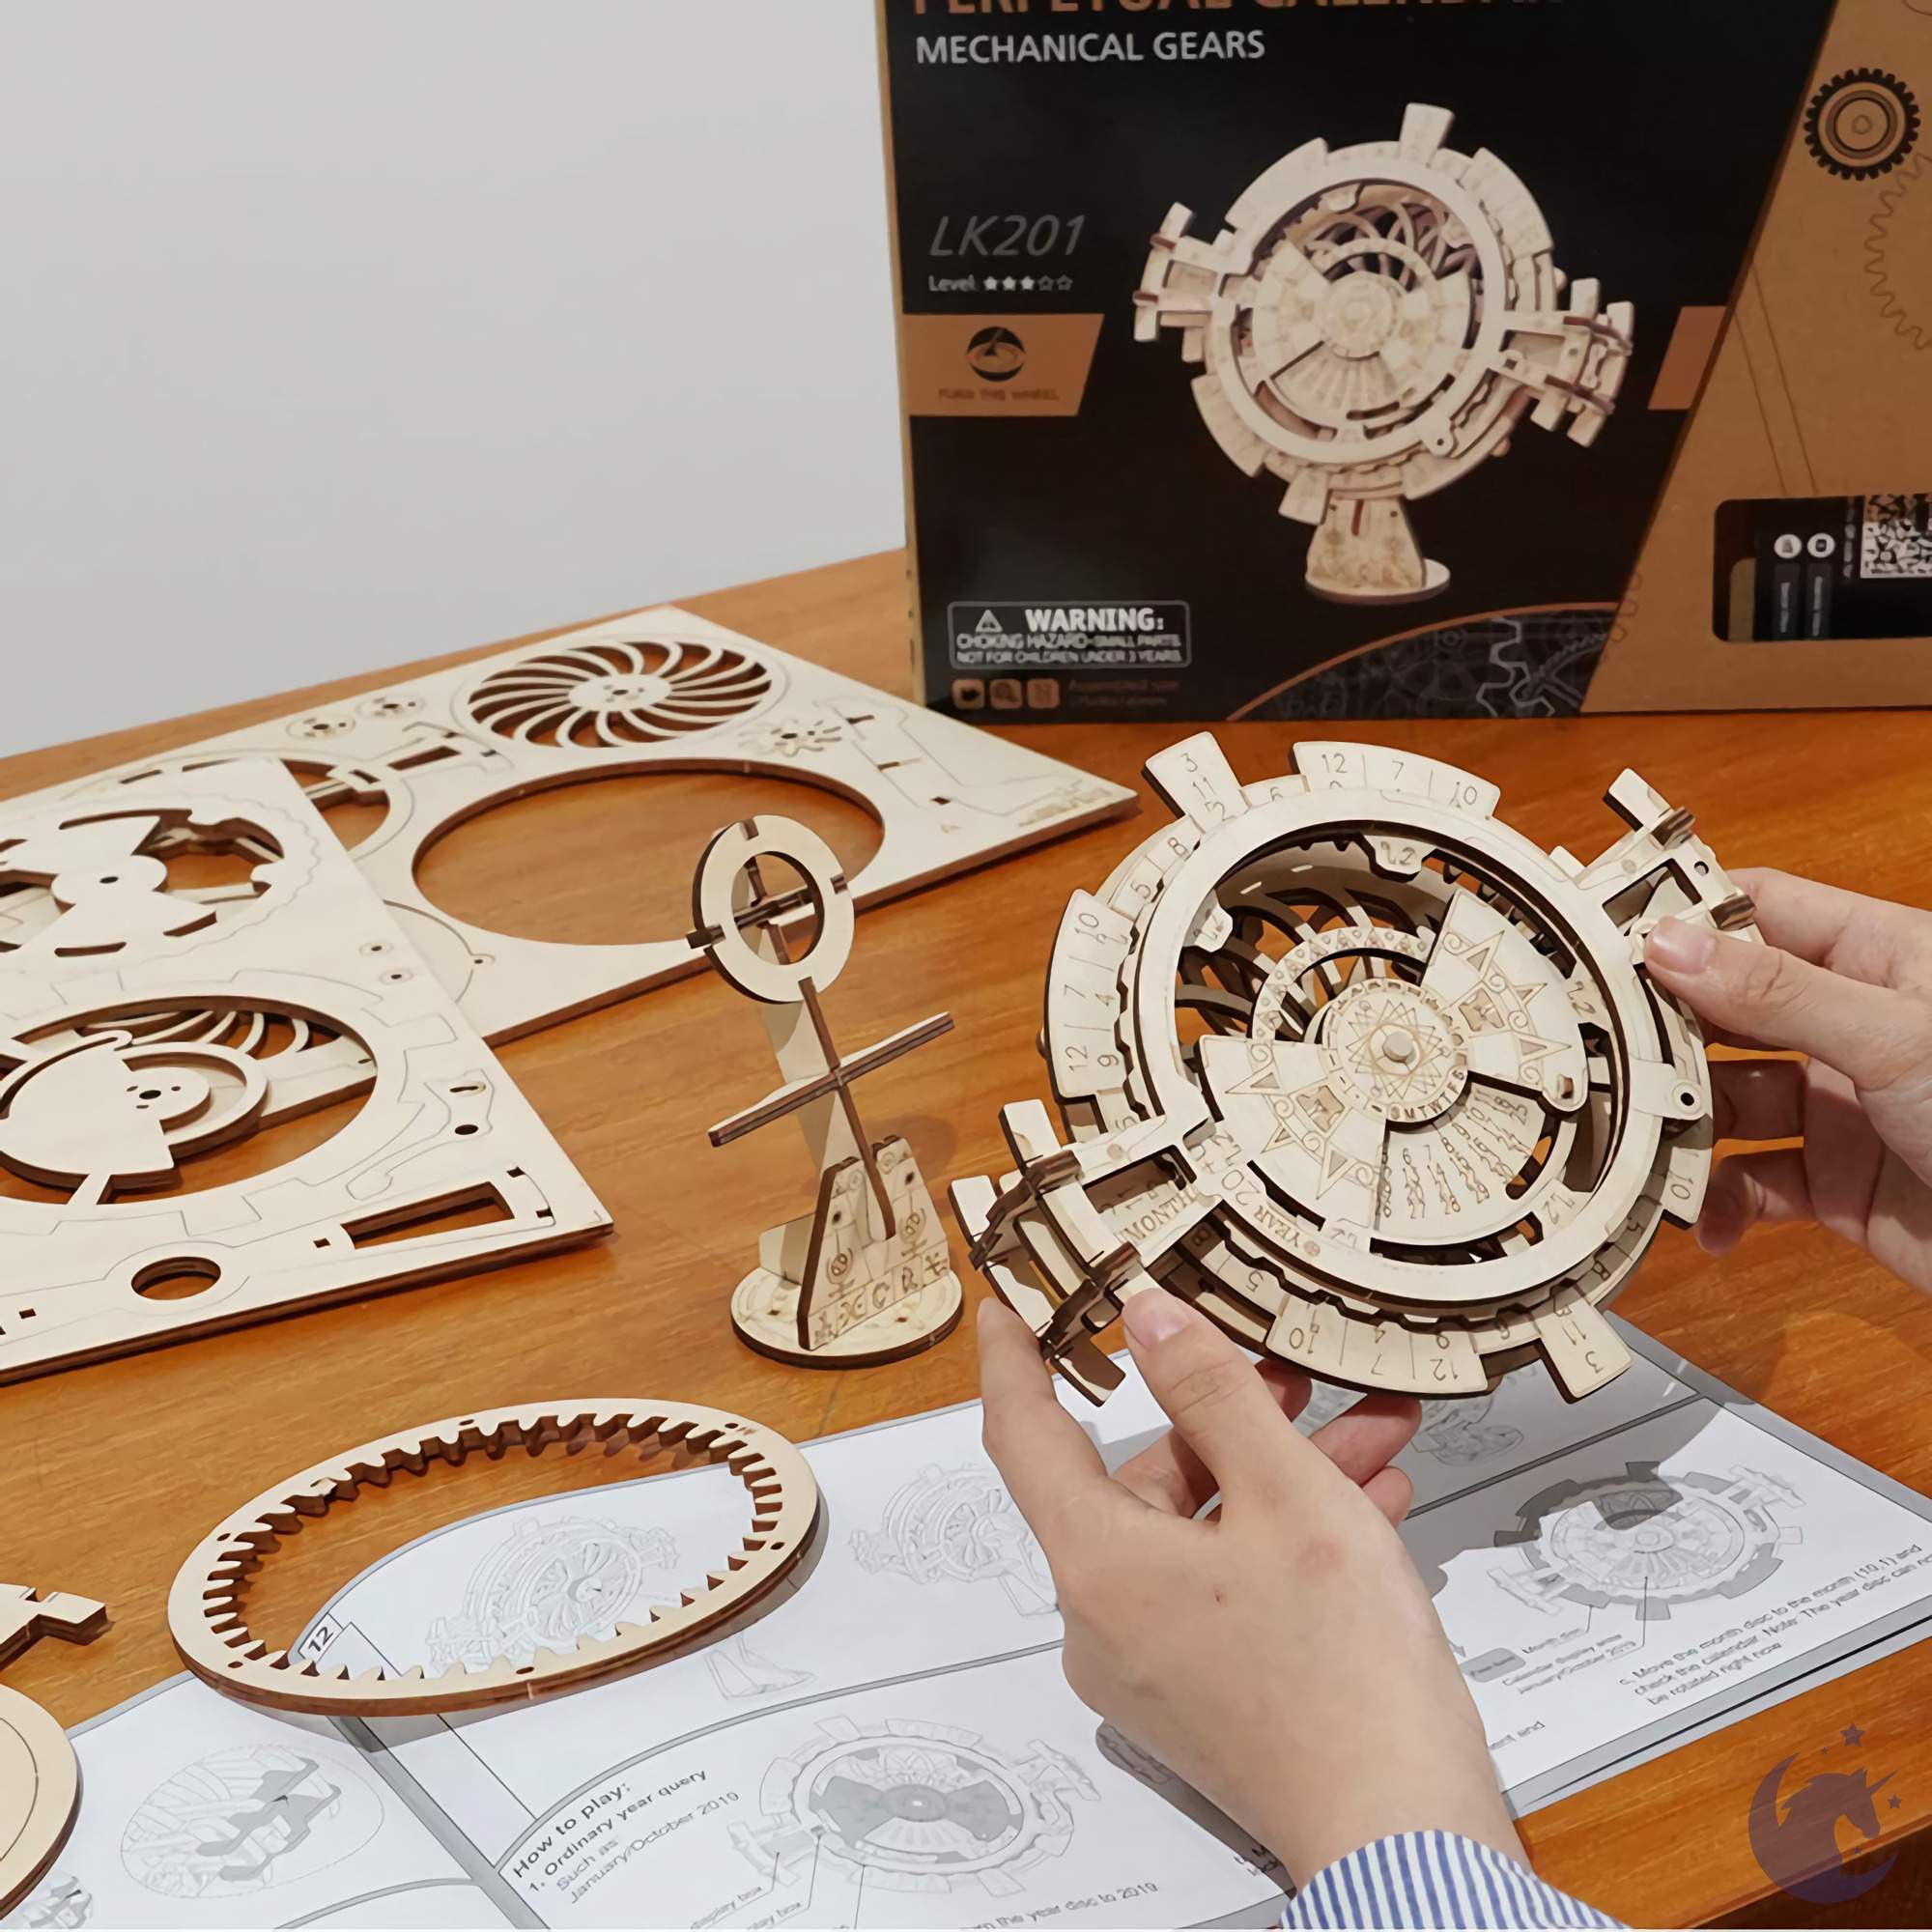 unicorntoys robotime rokr perpetual calendar diy mechanical model building 3d wooden puzzle kit birthday gifts for teen LK201